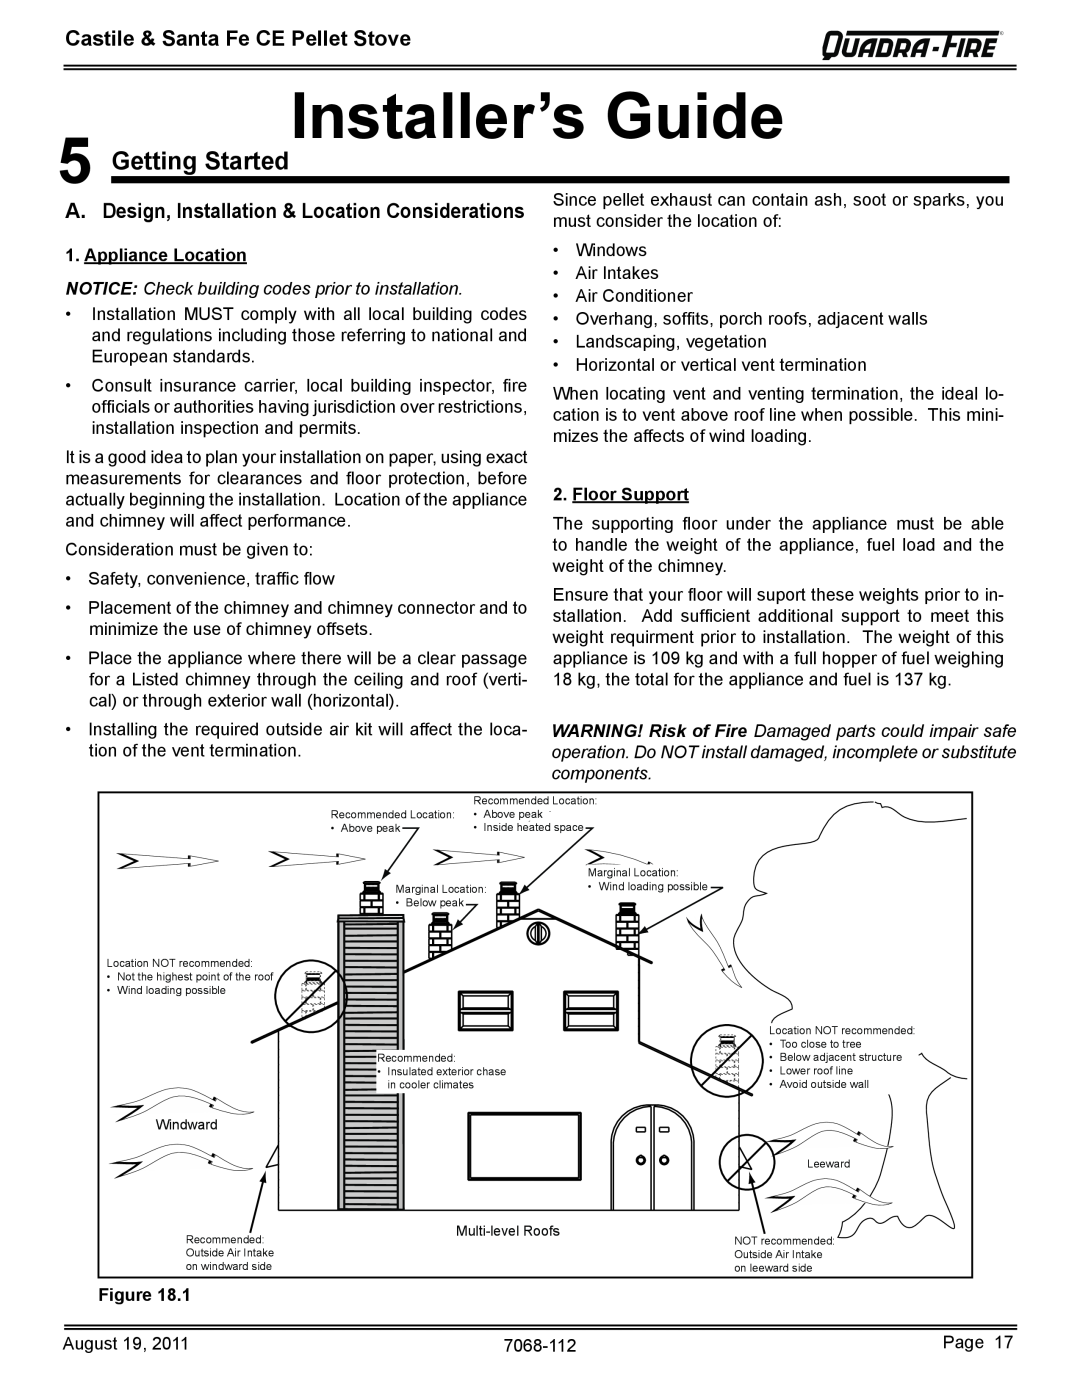 Quadra-Fire 7068-112 Installer’s Guide, Getting Started, Castile & Santa Fe CE Pellet Stove, Appliance Location 